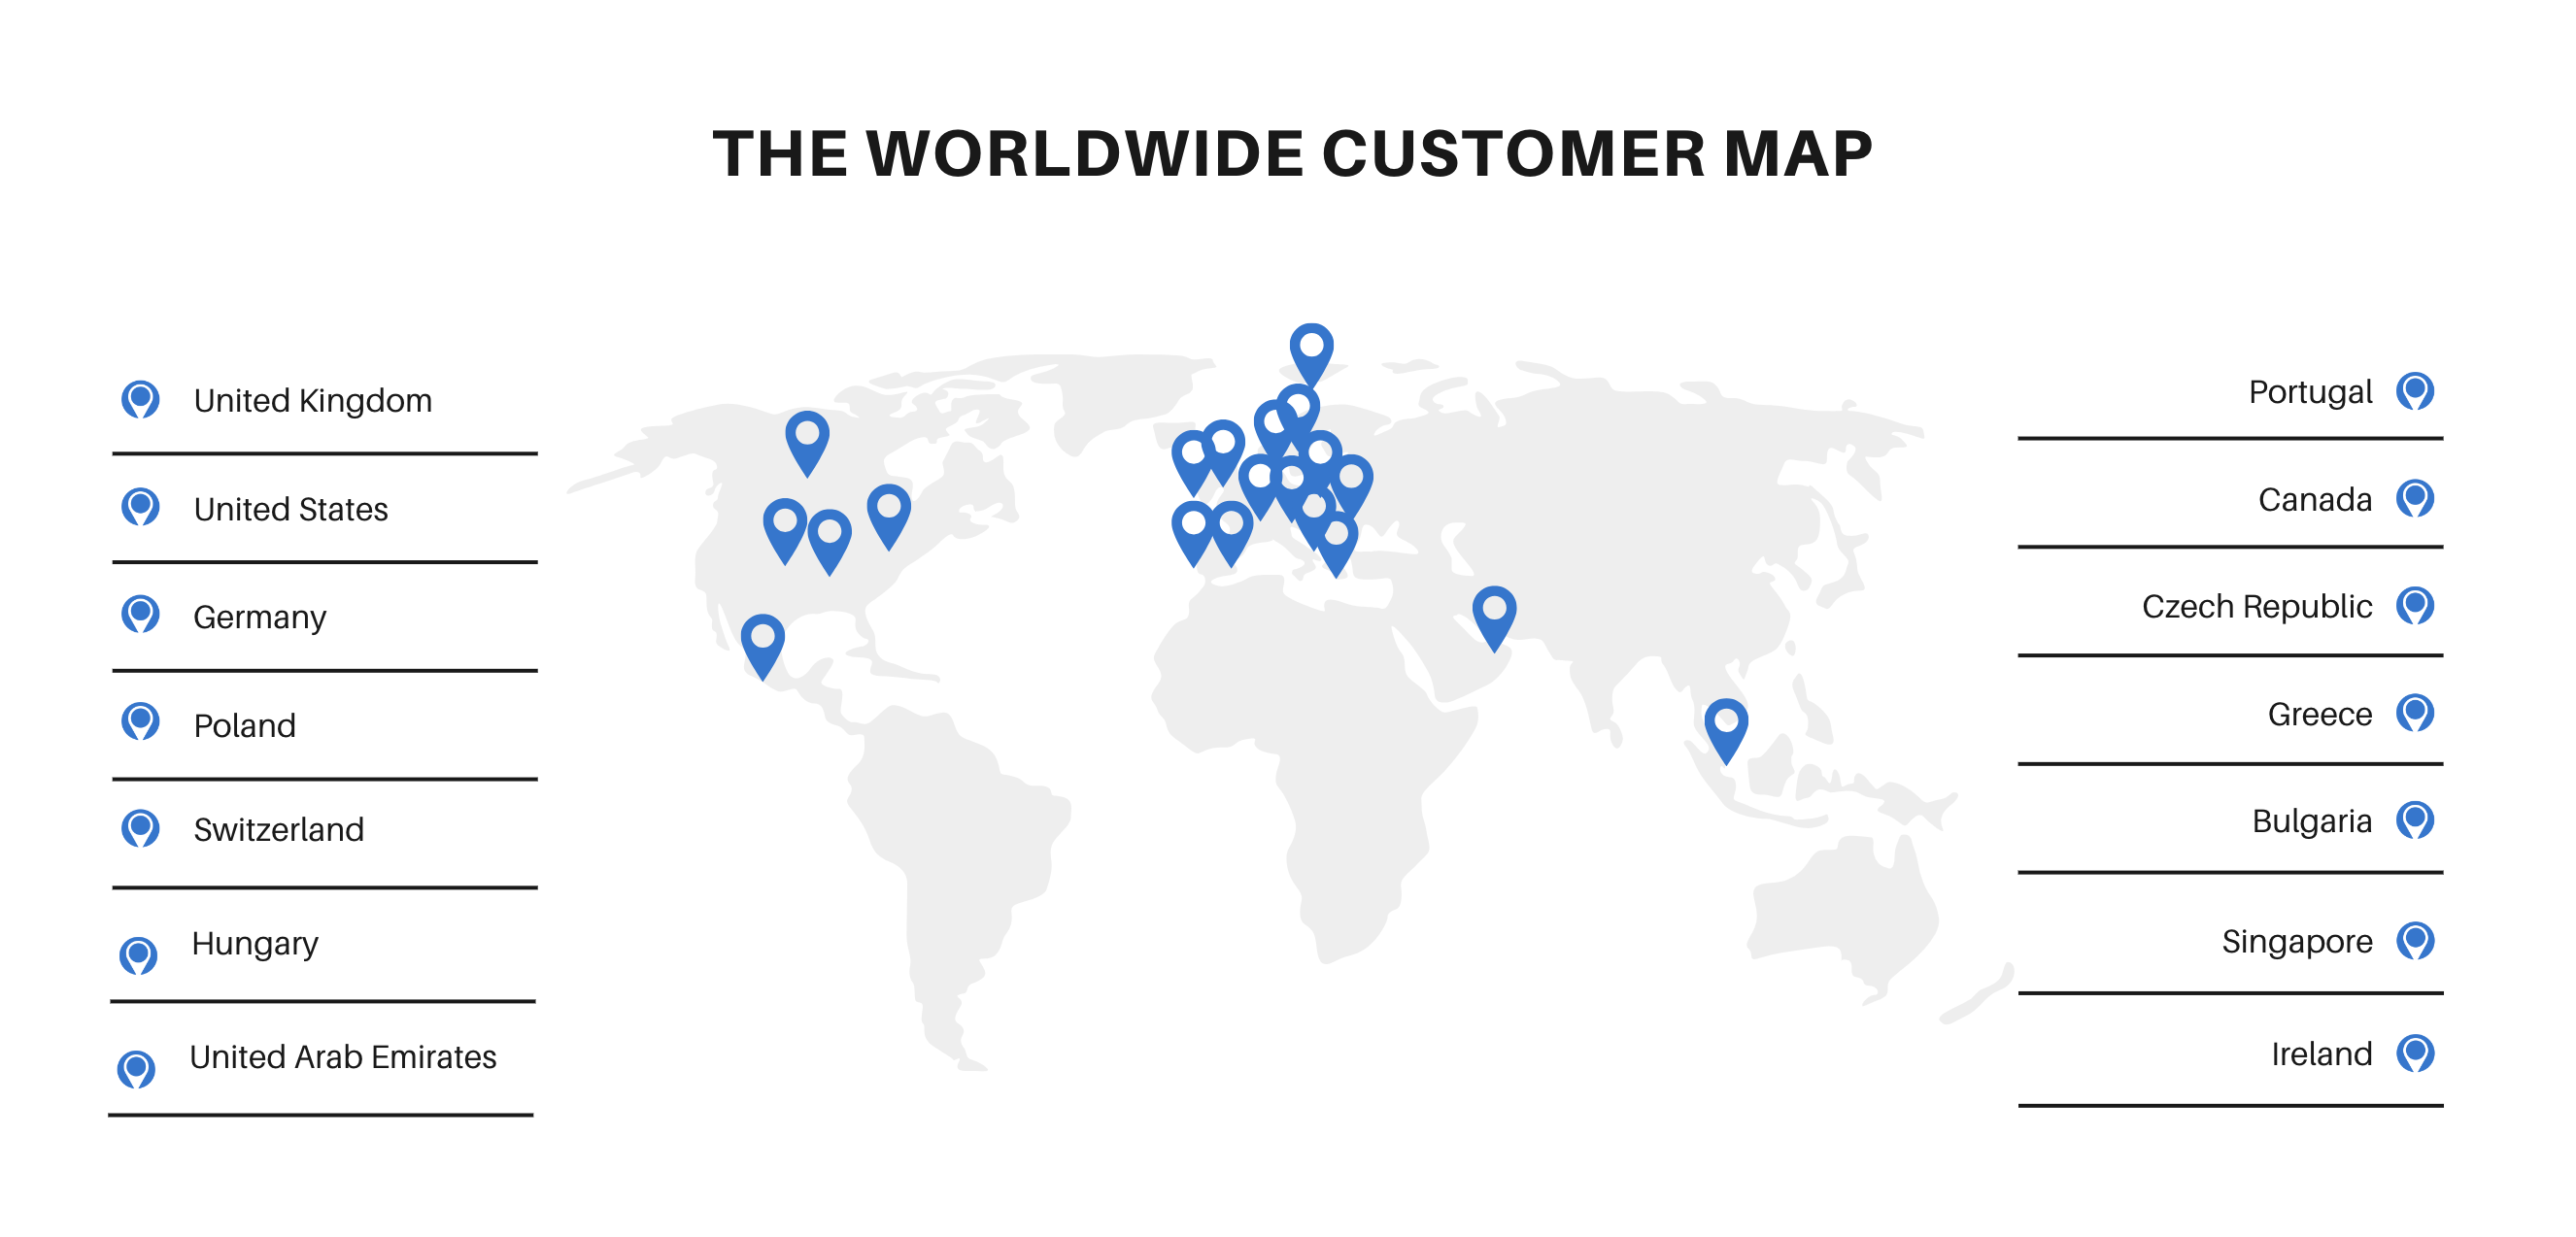 The worldwide customer map